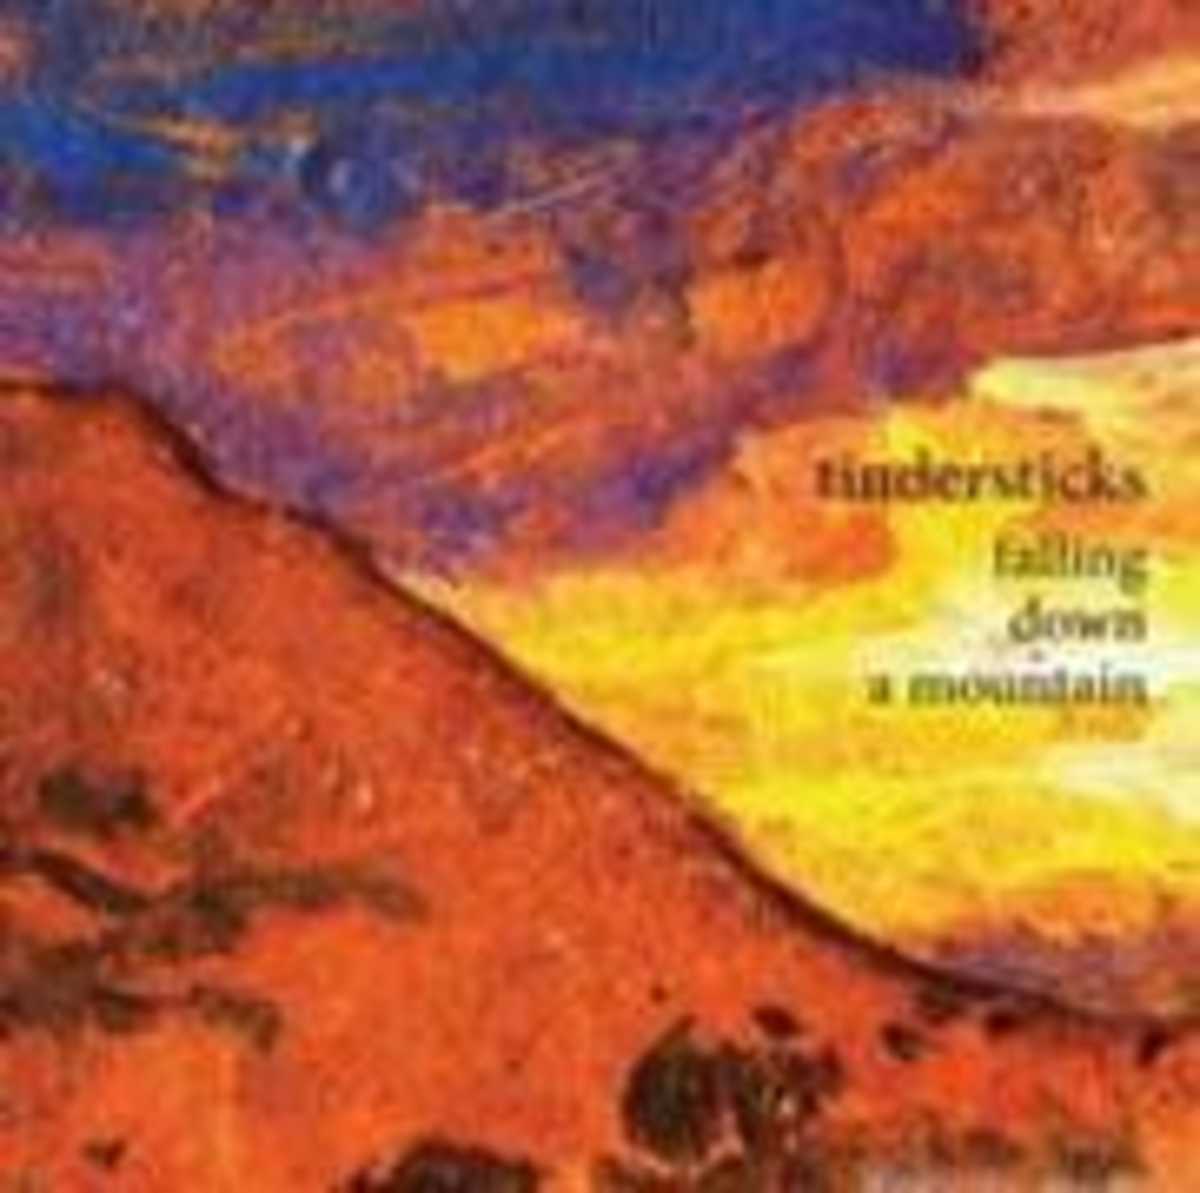 Tindersticks - Falling down a mountain